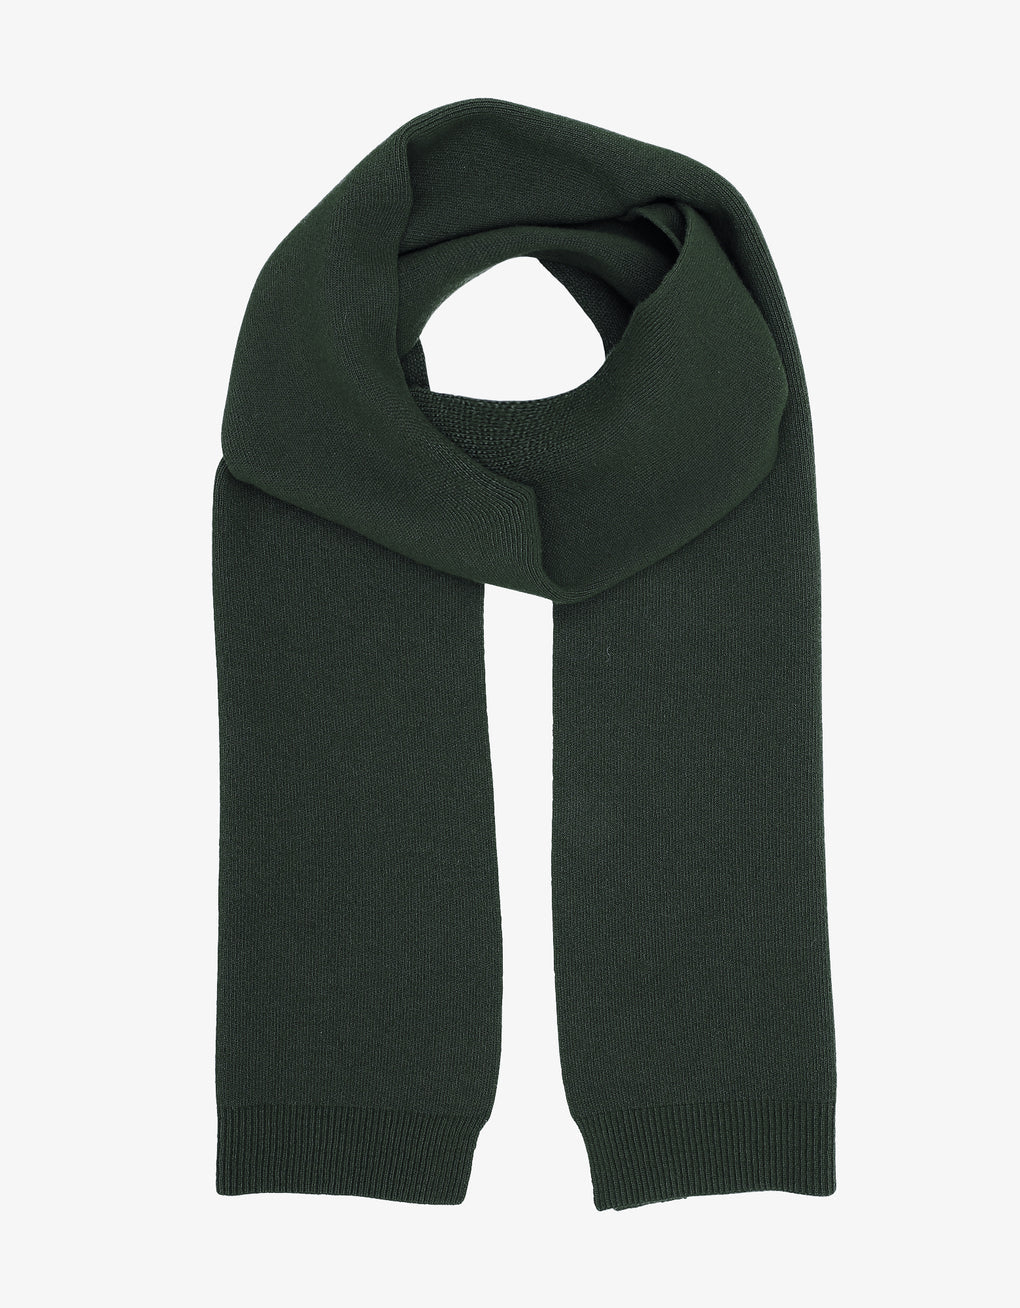 Merino wool scarf - hunter green